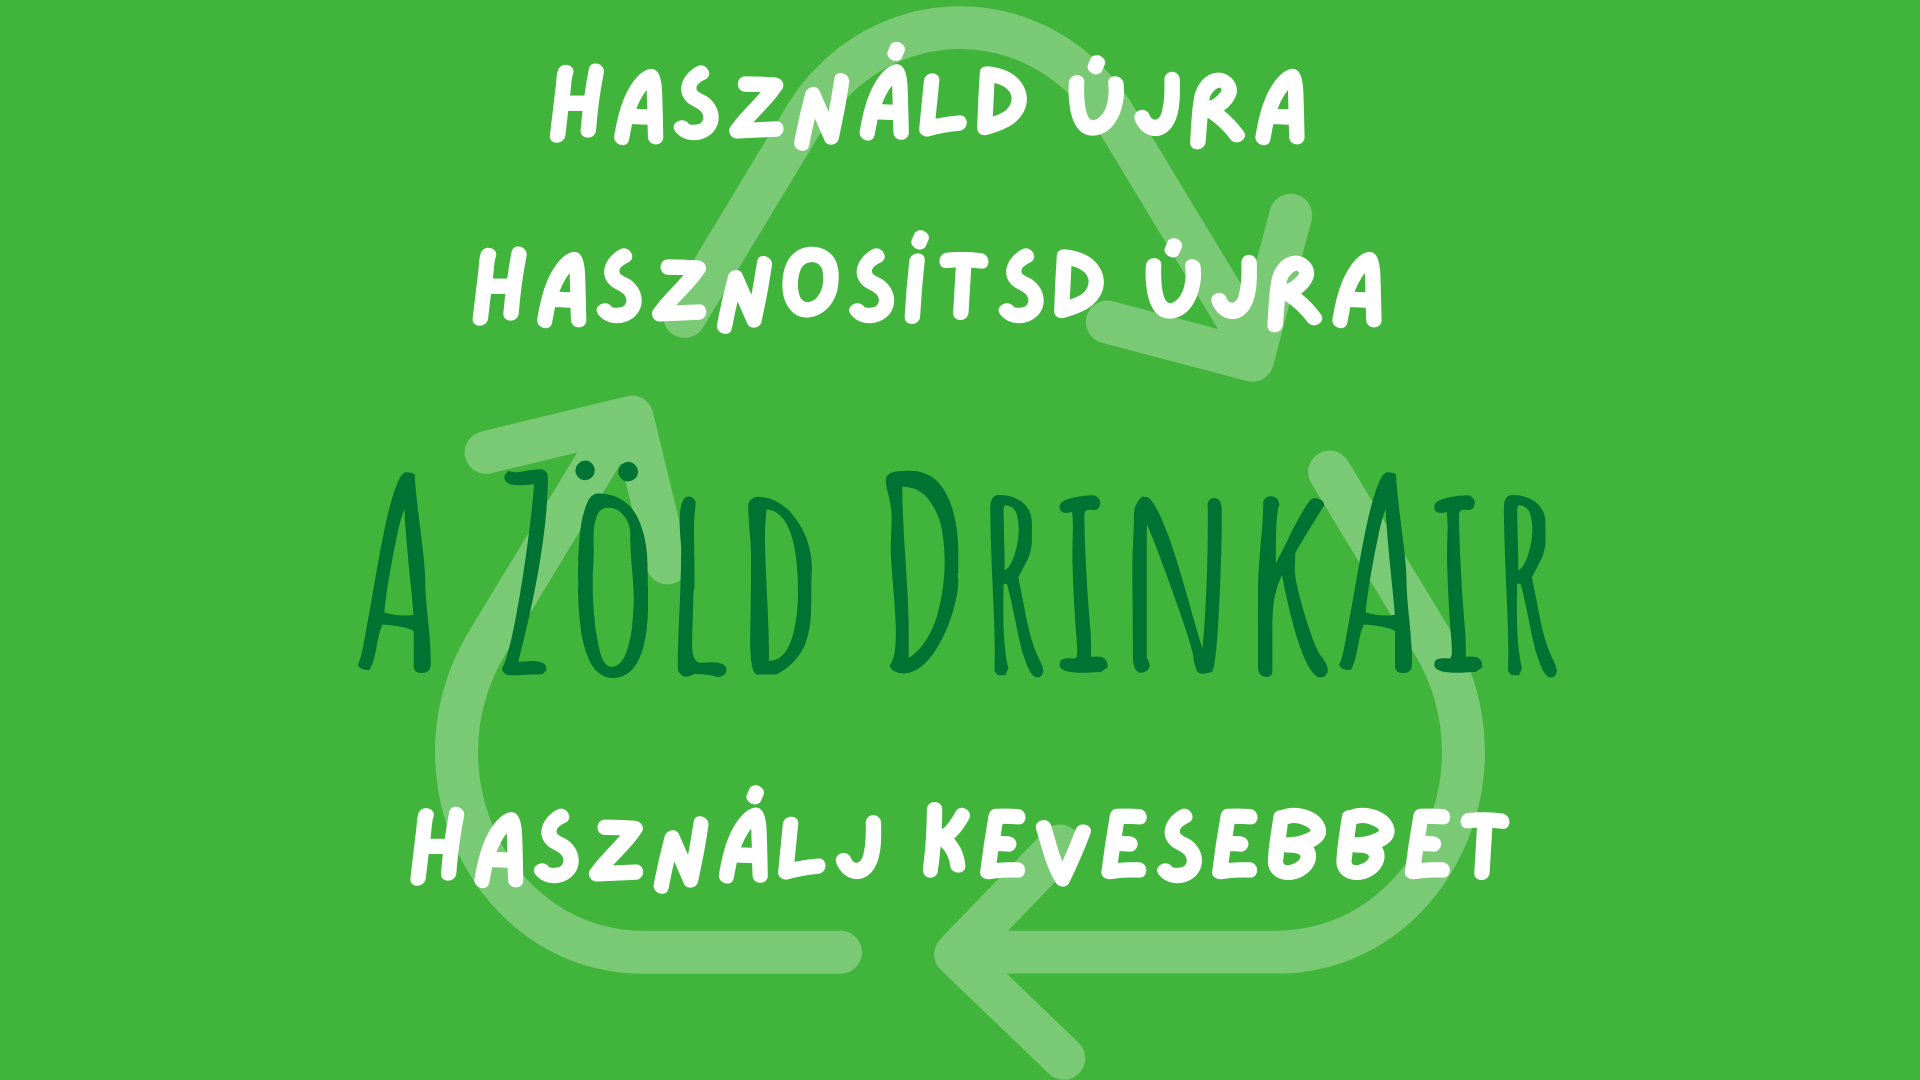 A Zöld DrinkAir